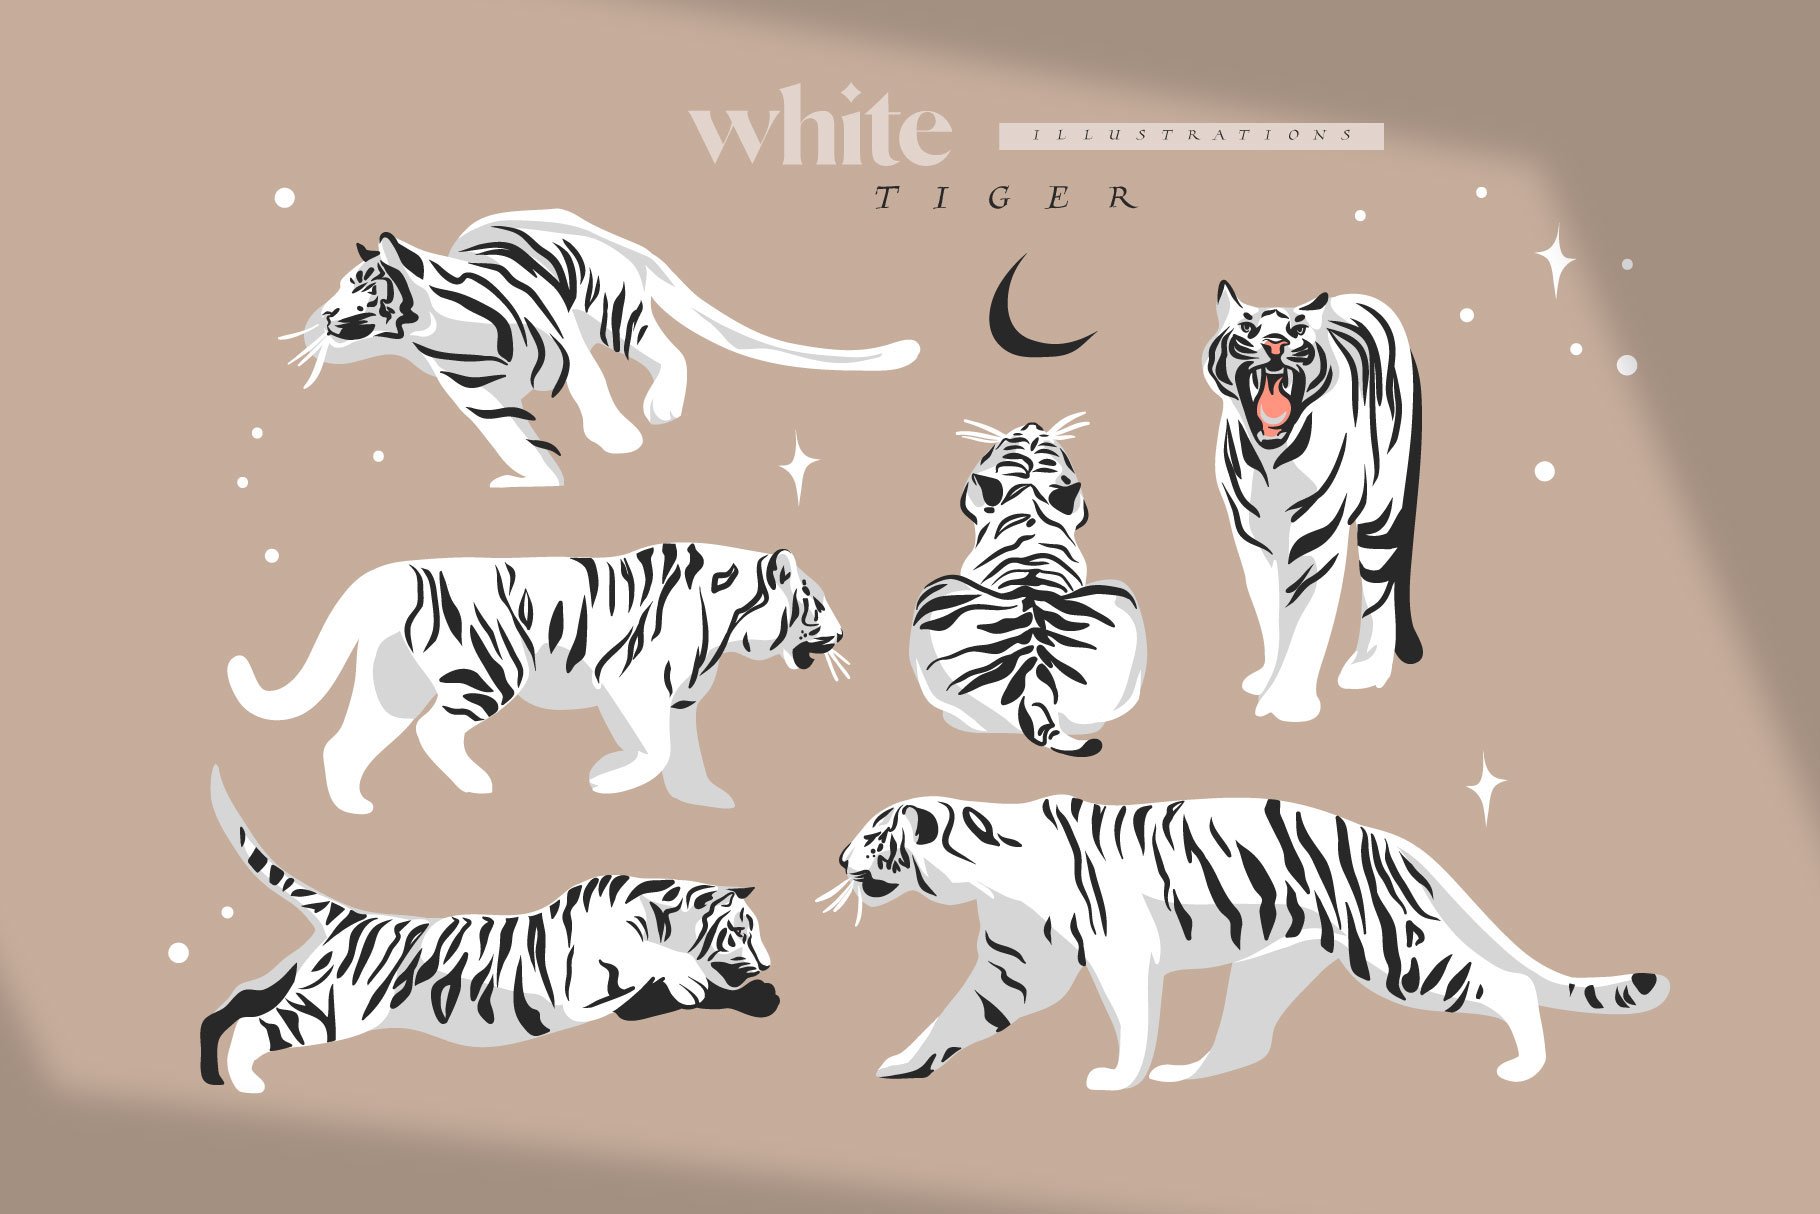 White tiger.